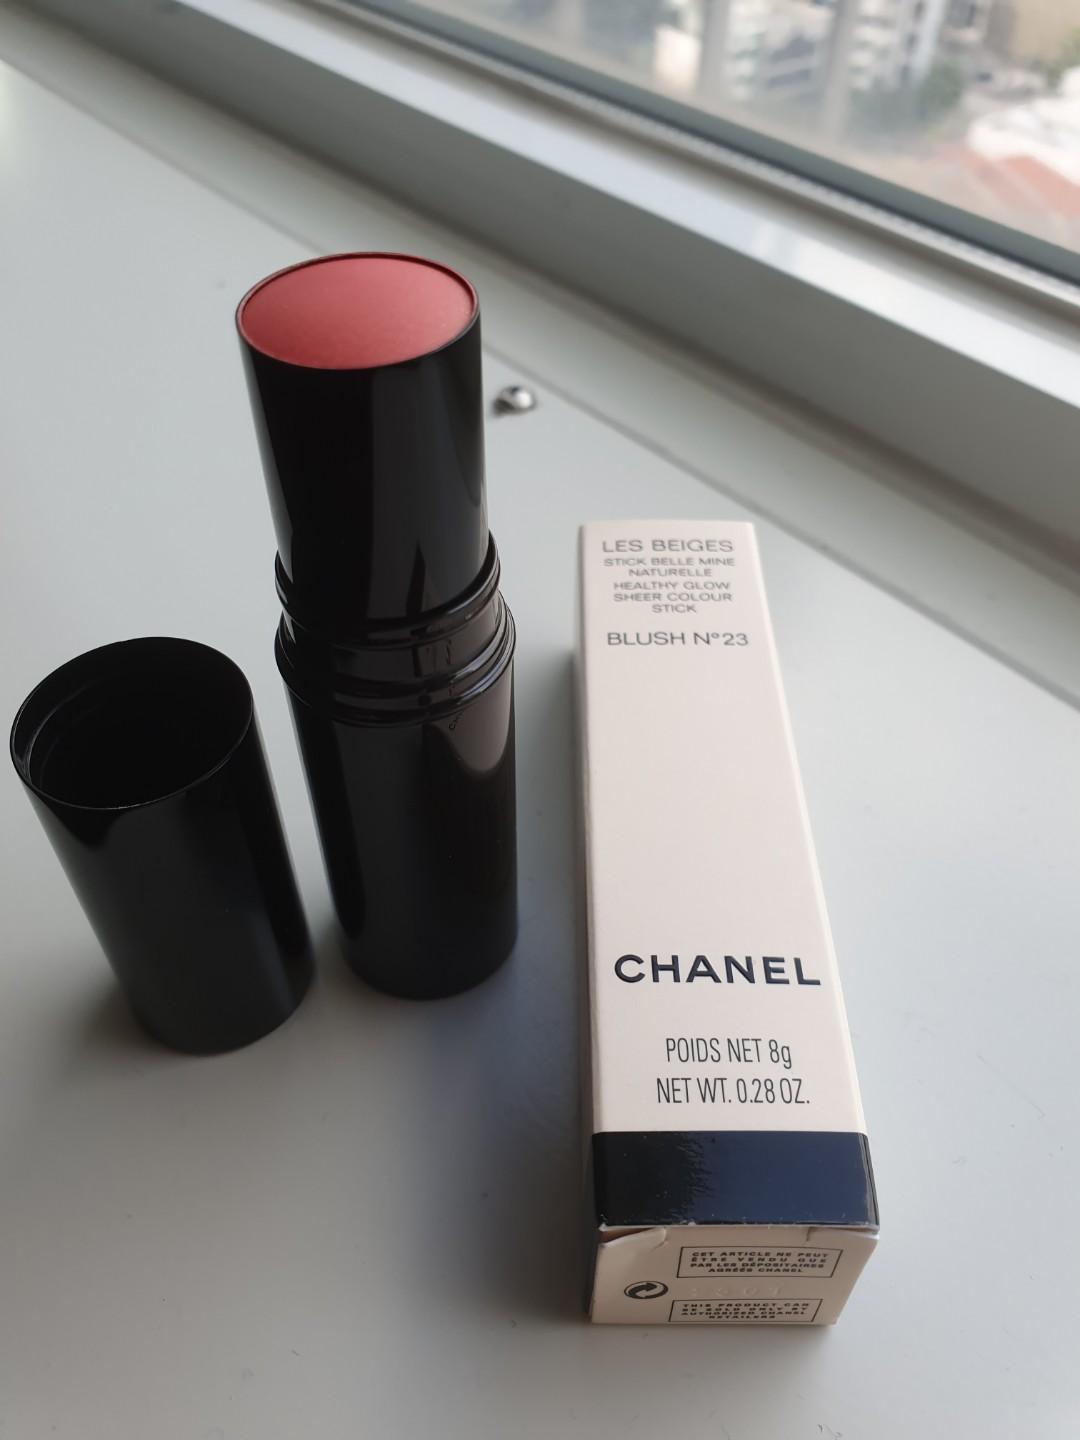 Chanel Les Beiges Healthy Glow Sheer Colour Stick